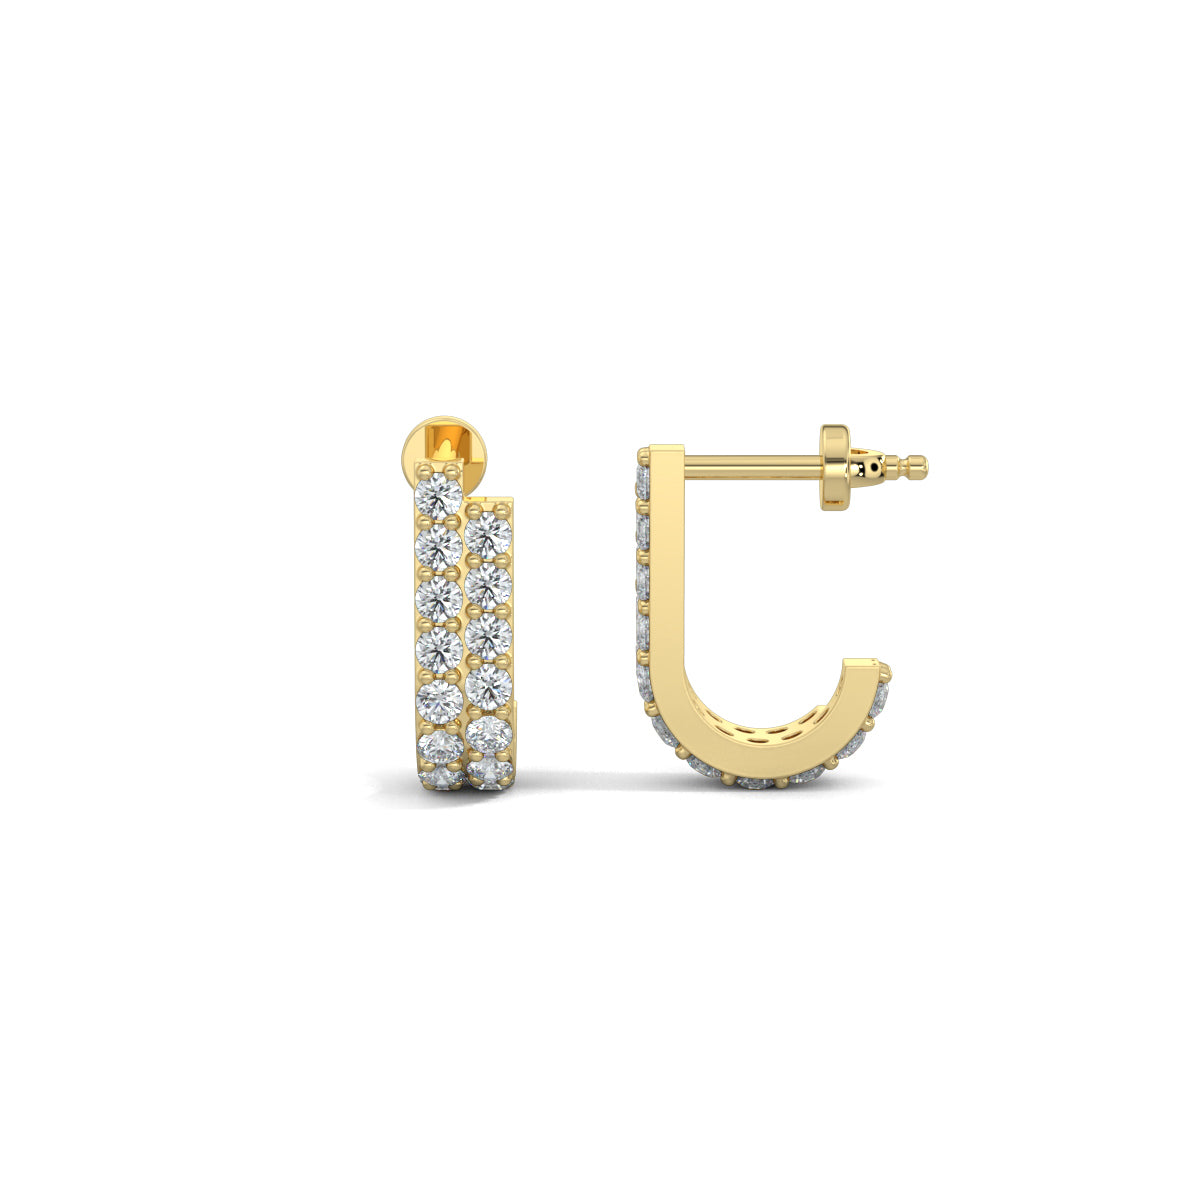 Yellow Gold, Diamond Earrings, LunaDazzle Earrings, Half-bali diamond earrings, Natural Diamonds, Lab-grown diamonds, Pave diamond earrings, Luxury diamond jewelry, Contemporary diamond earrings